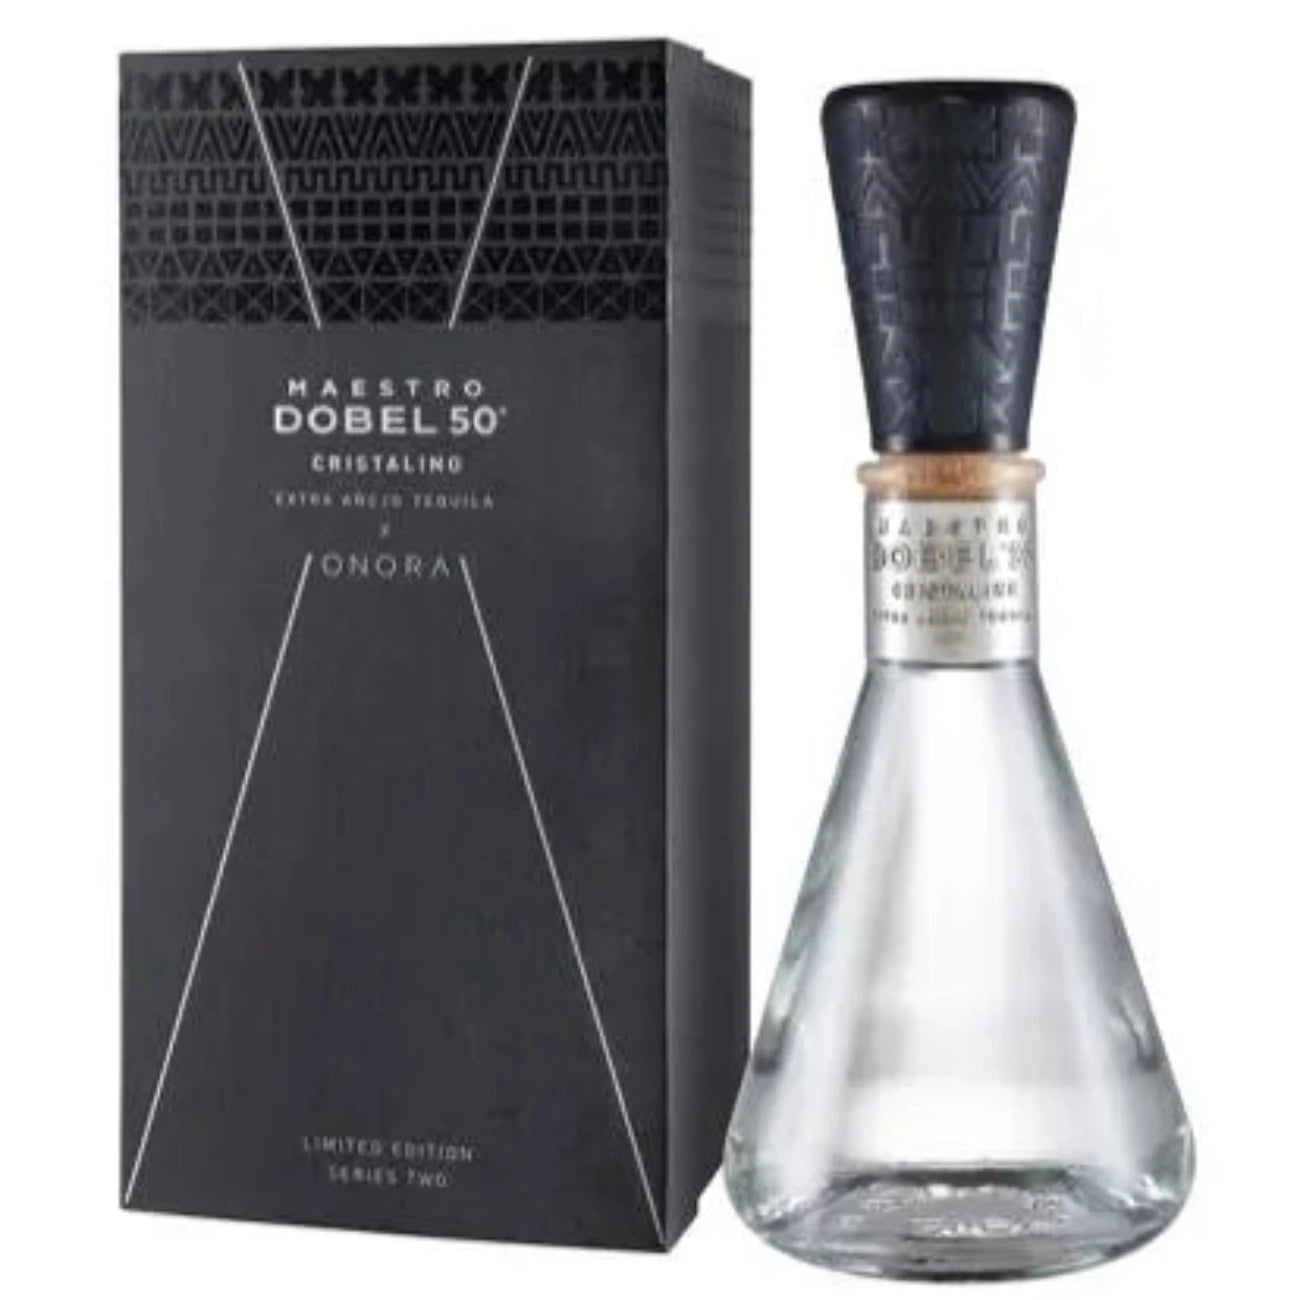 Maestro Dobel | 50 Cristalino Extra Anejo ONORO | Tequila